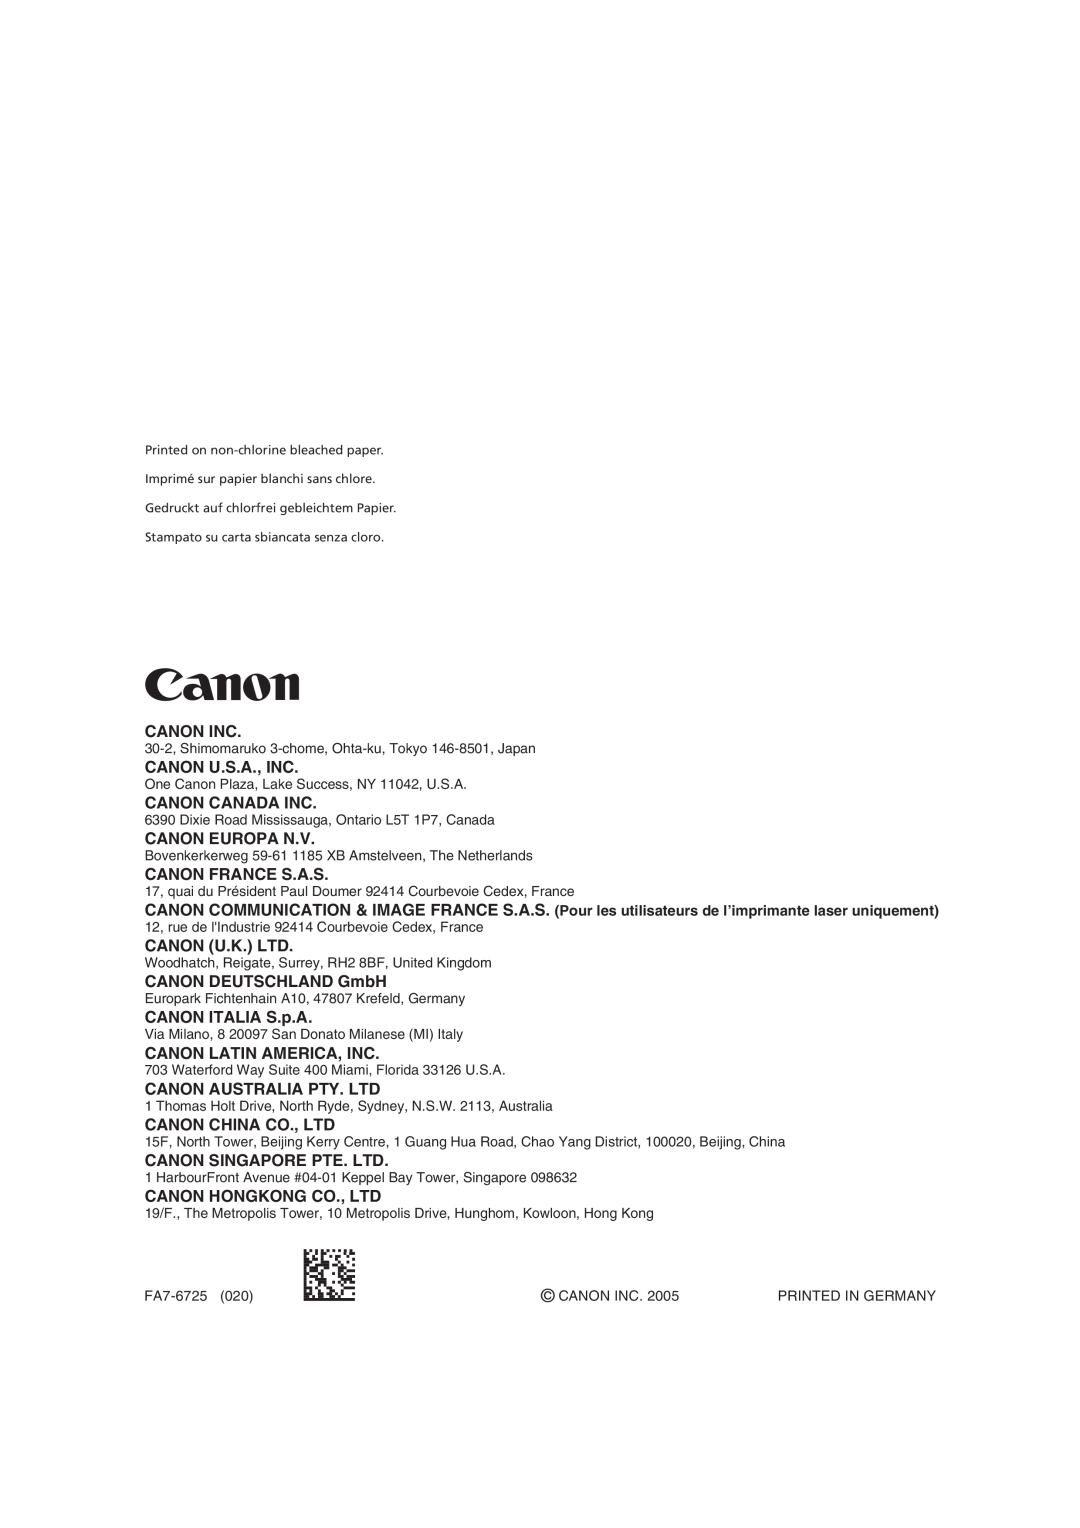 Canon 6570 Canon Inc, Canon U.S.A., Inc, Canon Canada Inc, Canon Europa N.V, Canon France S.A.S, CANON DEUTSCHLAND GmbH 